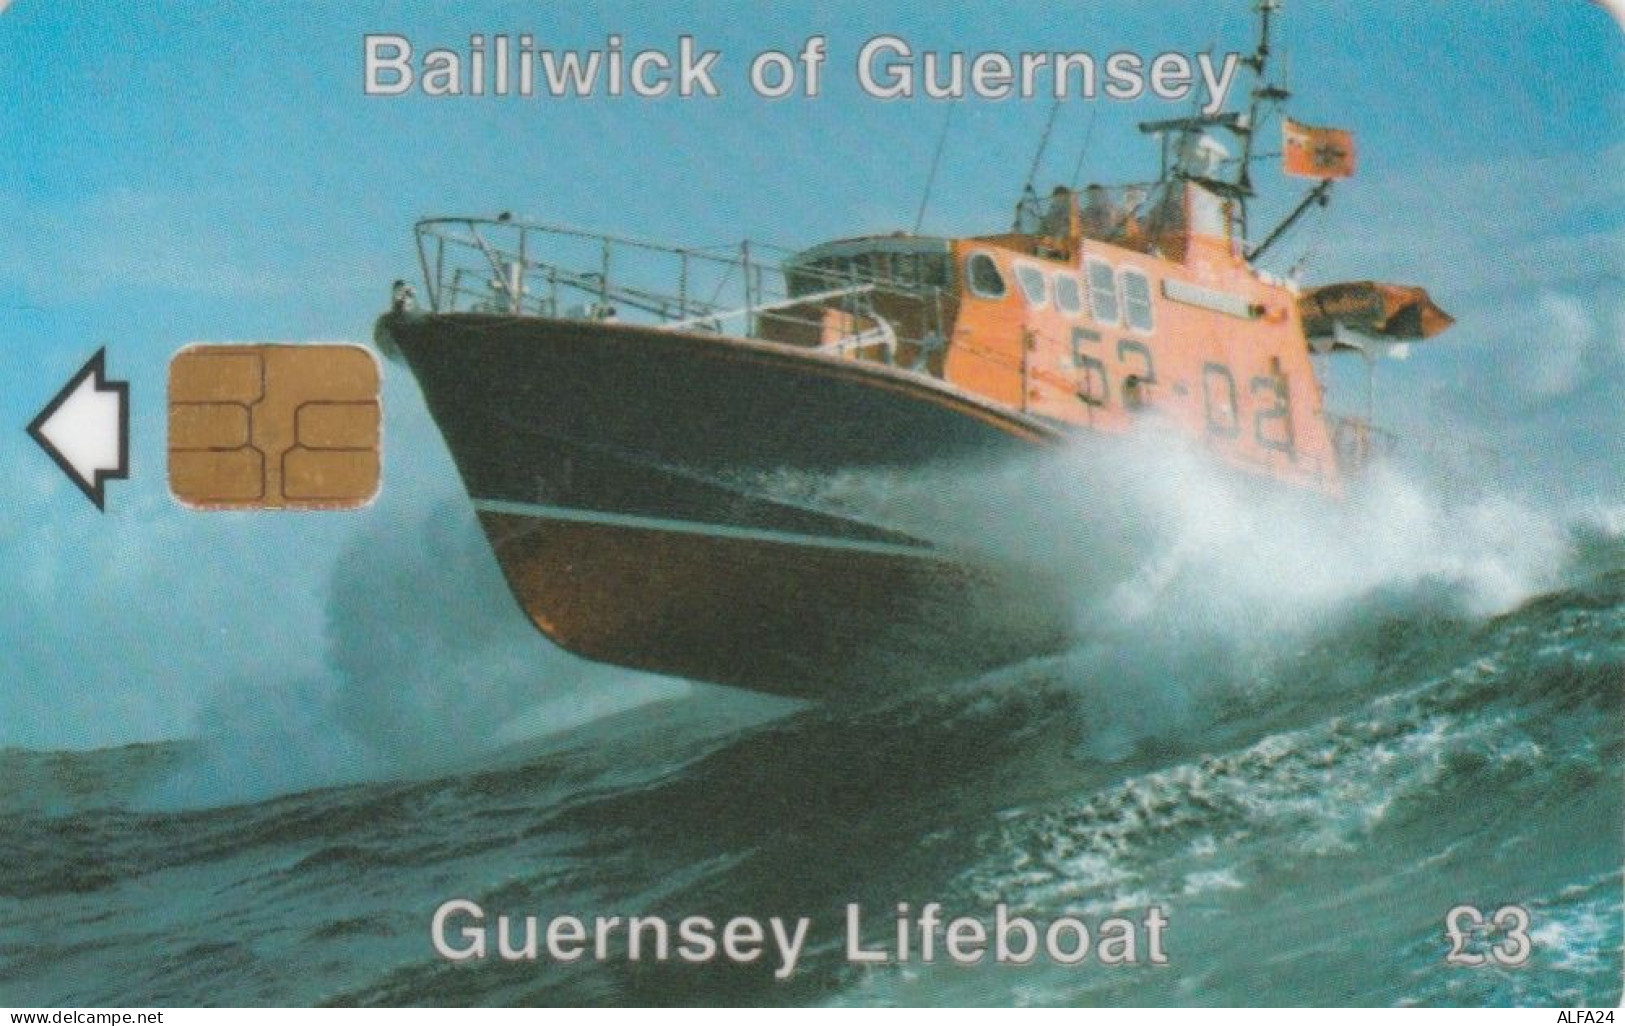 PHONE CARD GUERNSEY (E103.55.7 - [ 7] Jersey Y Guernsey